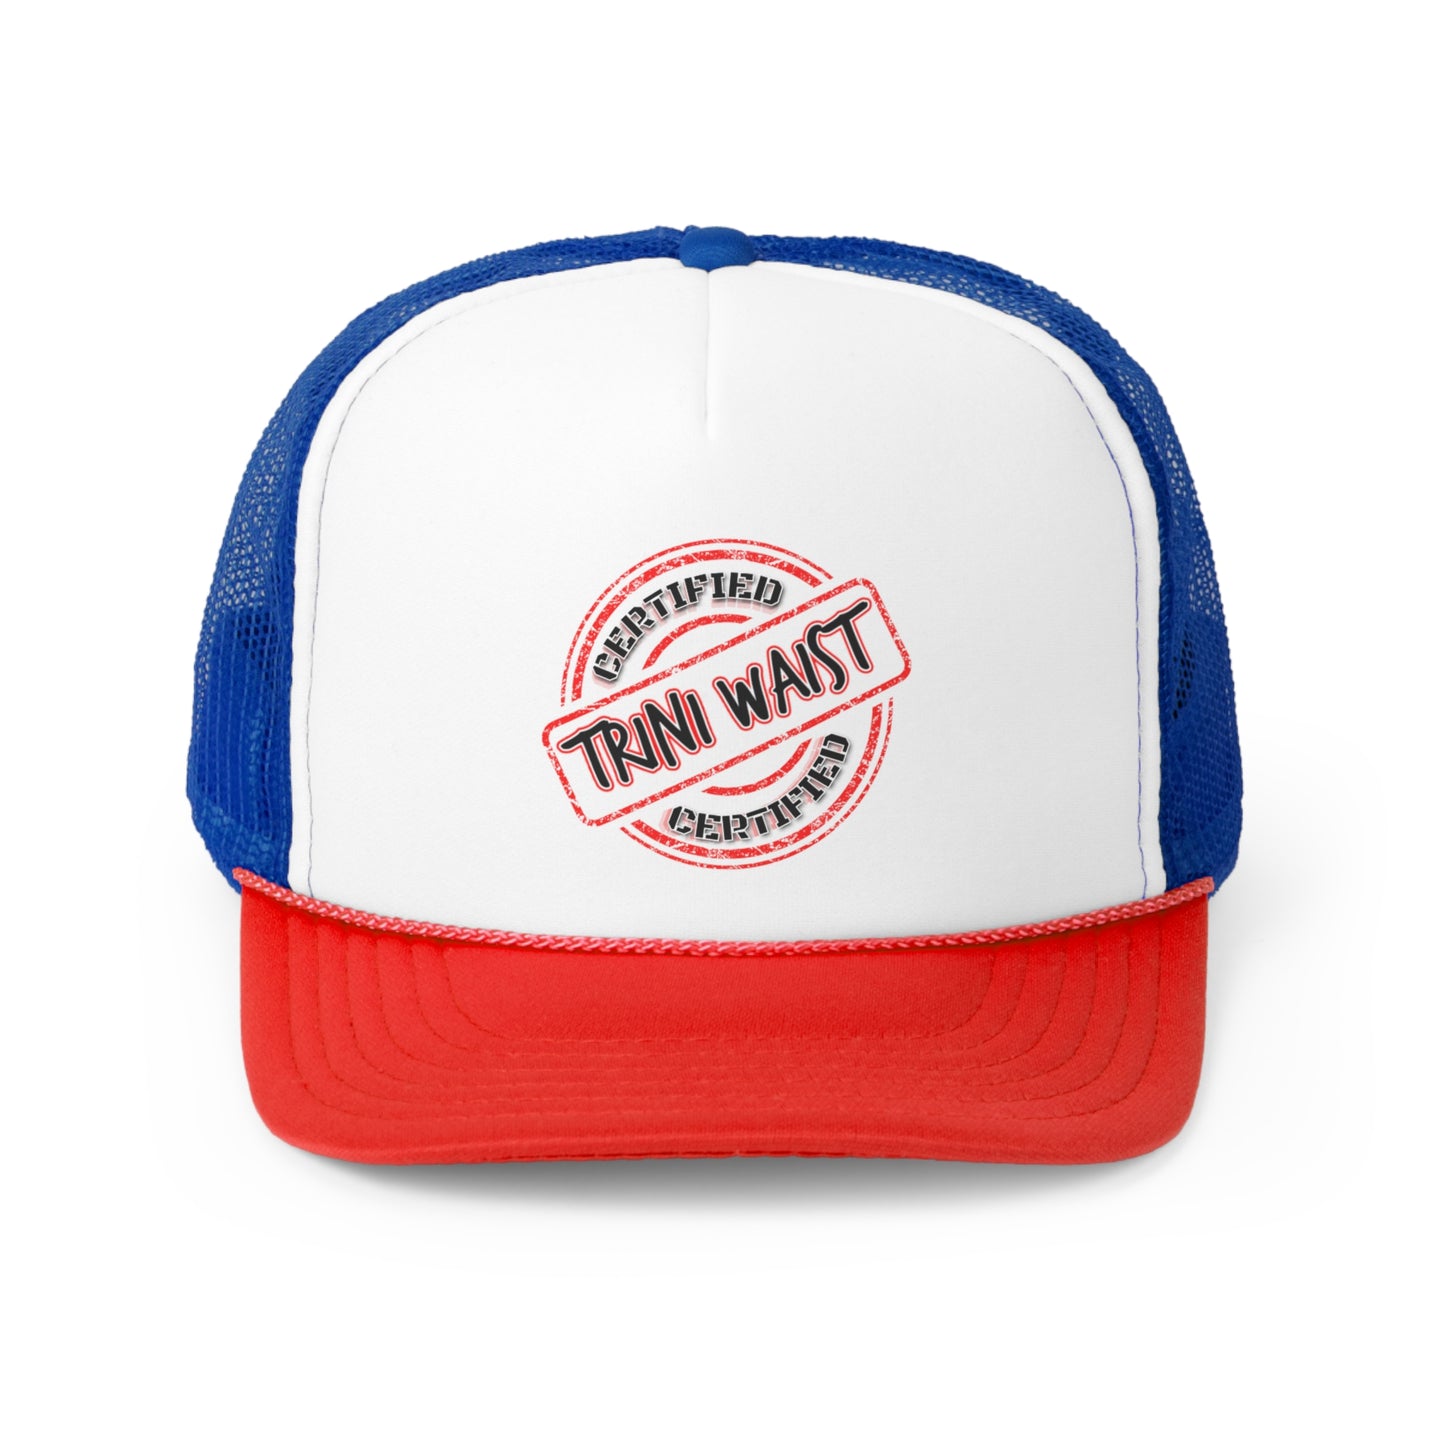 Keevo Certified - Trini Waist - Trucker Caps